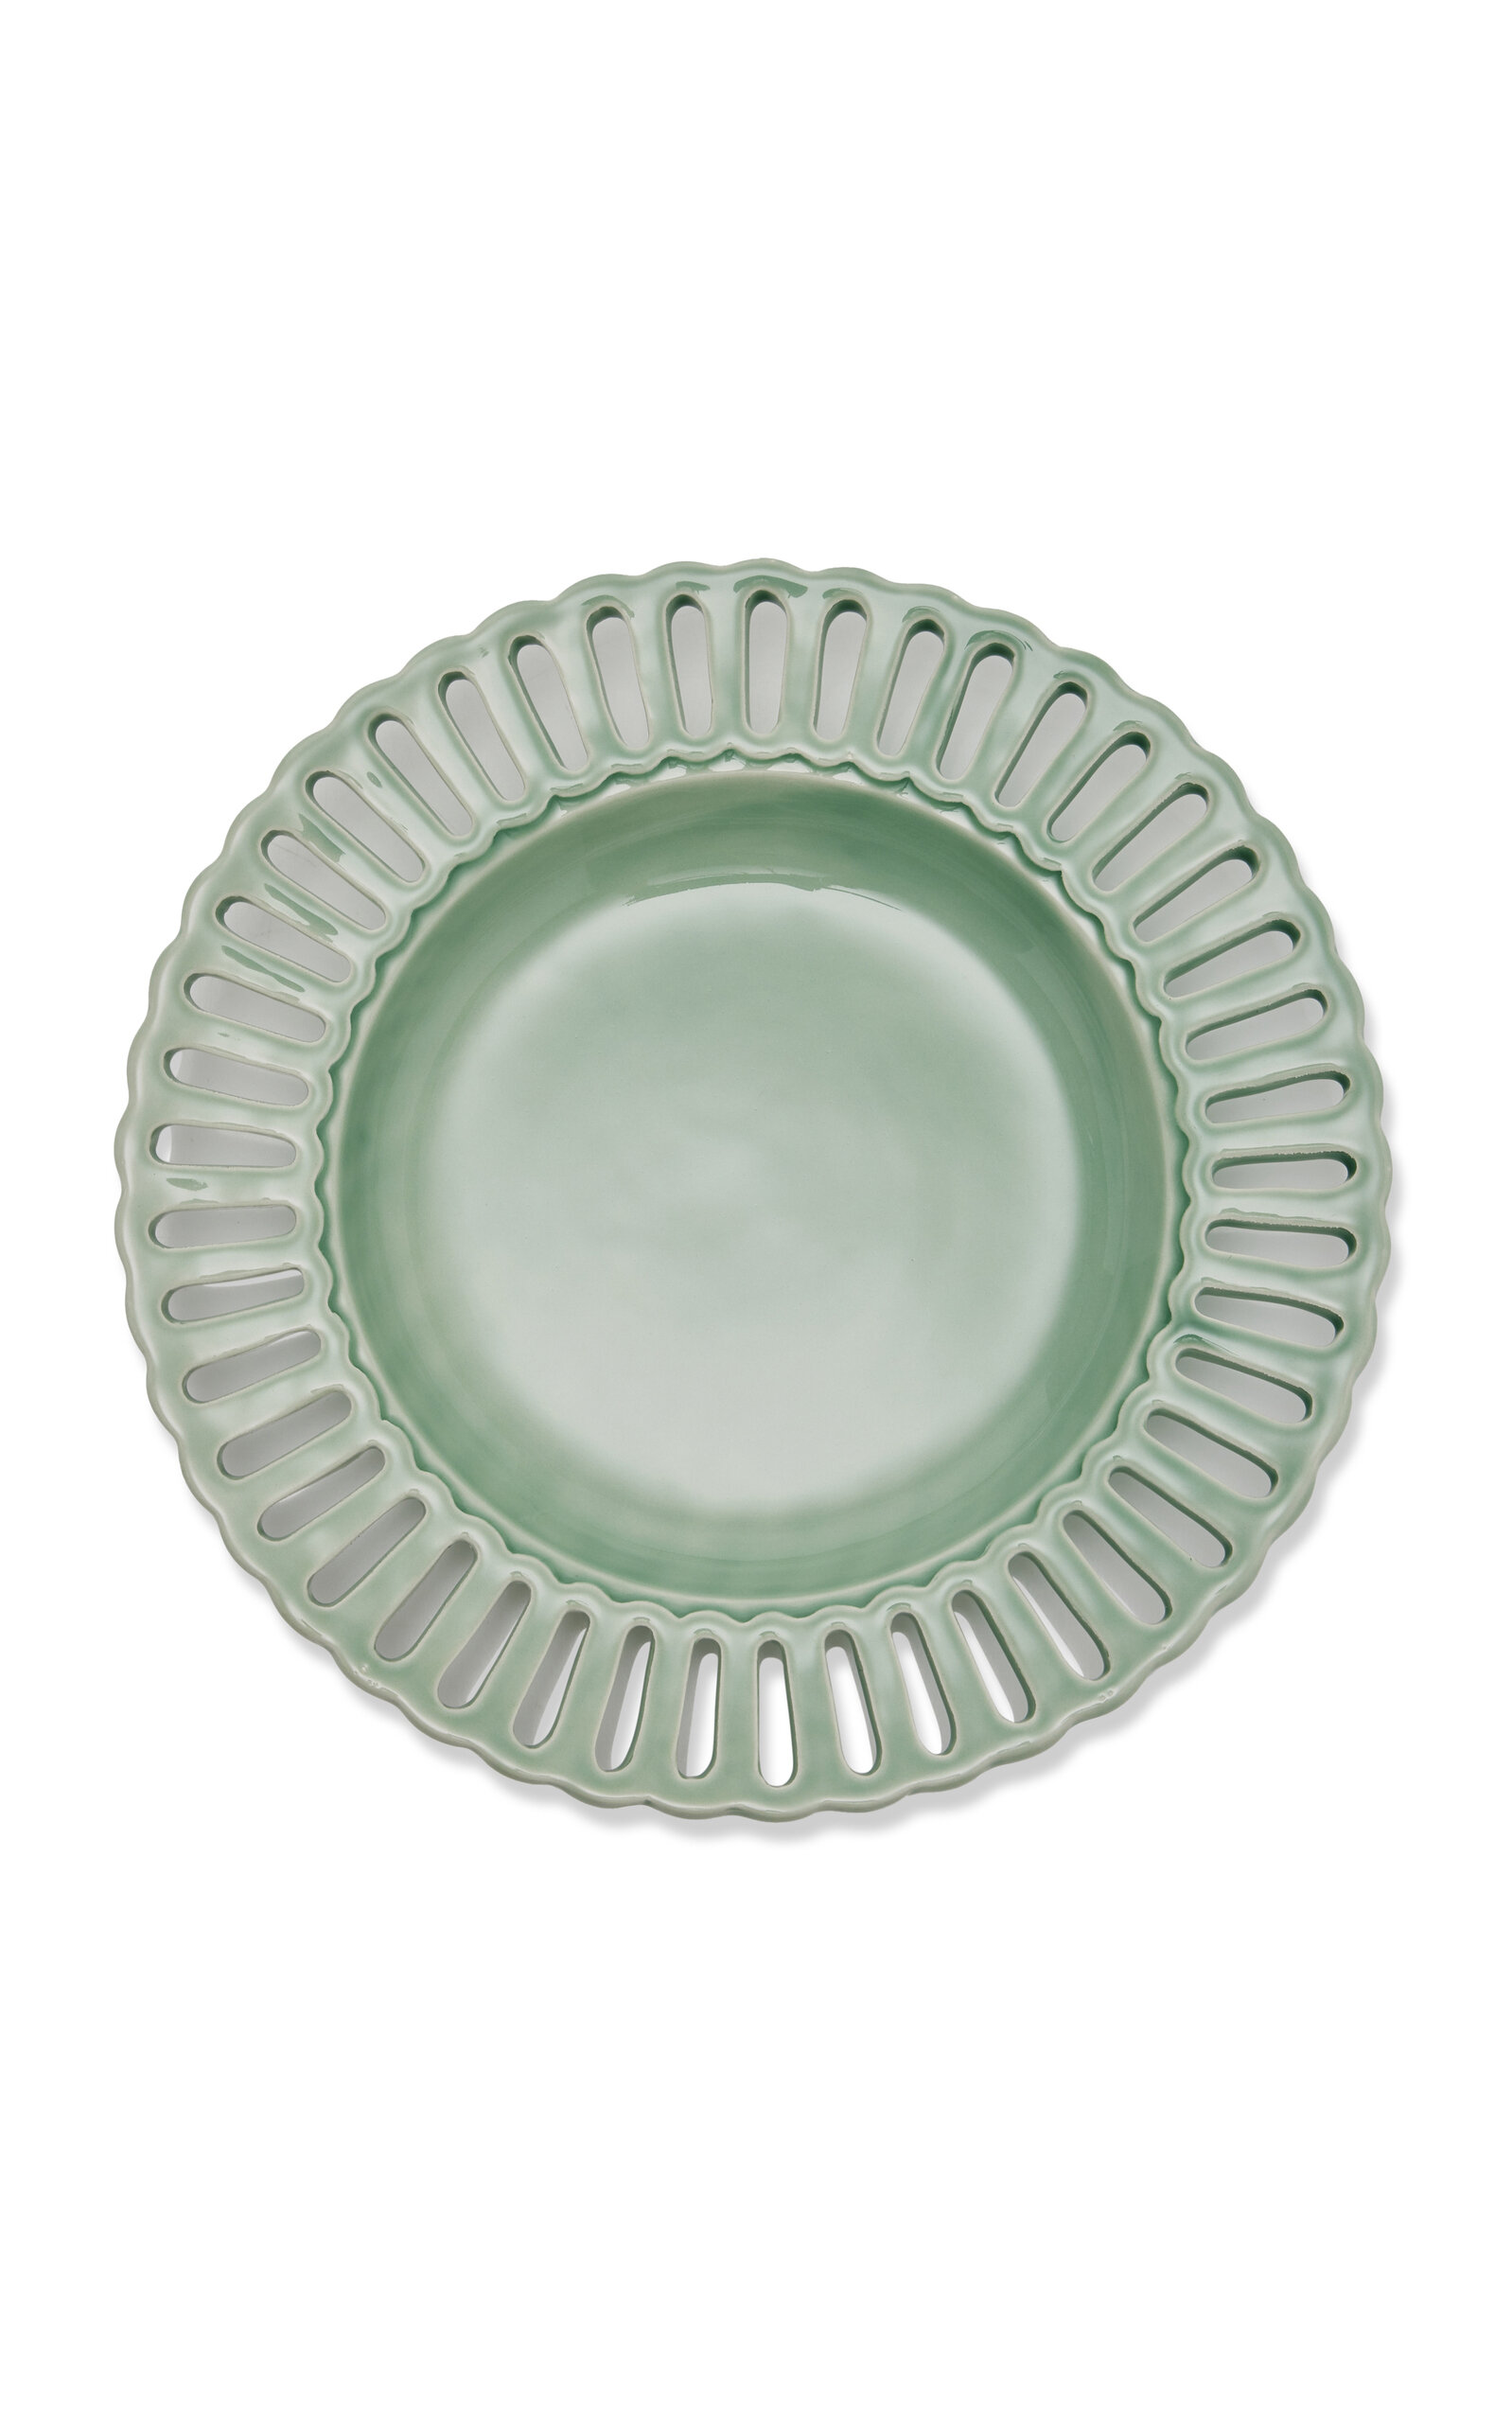 Moda Domus Balconata Creamware Soup Plate In Green